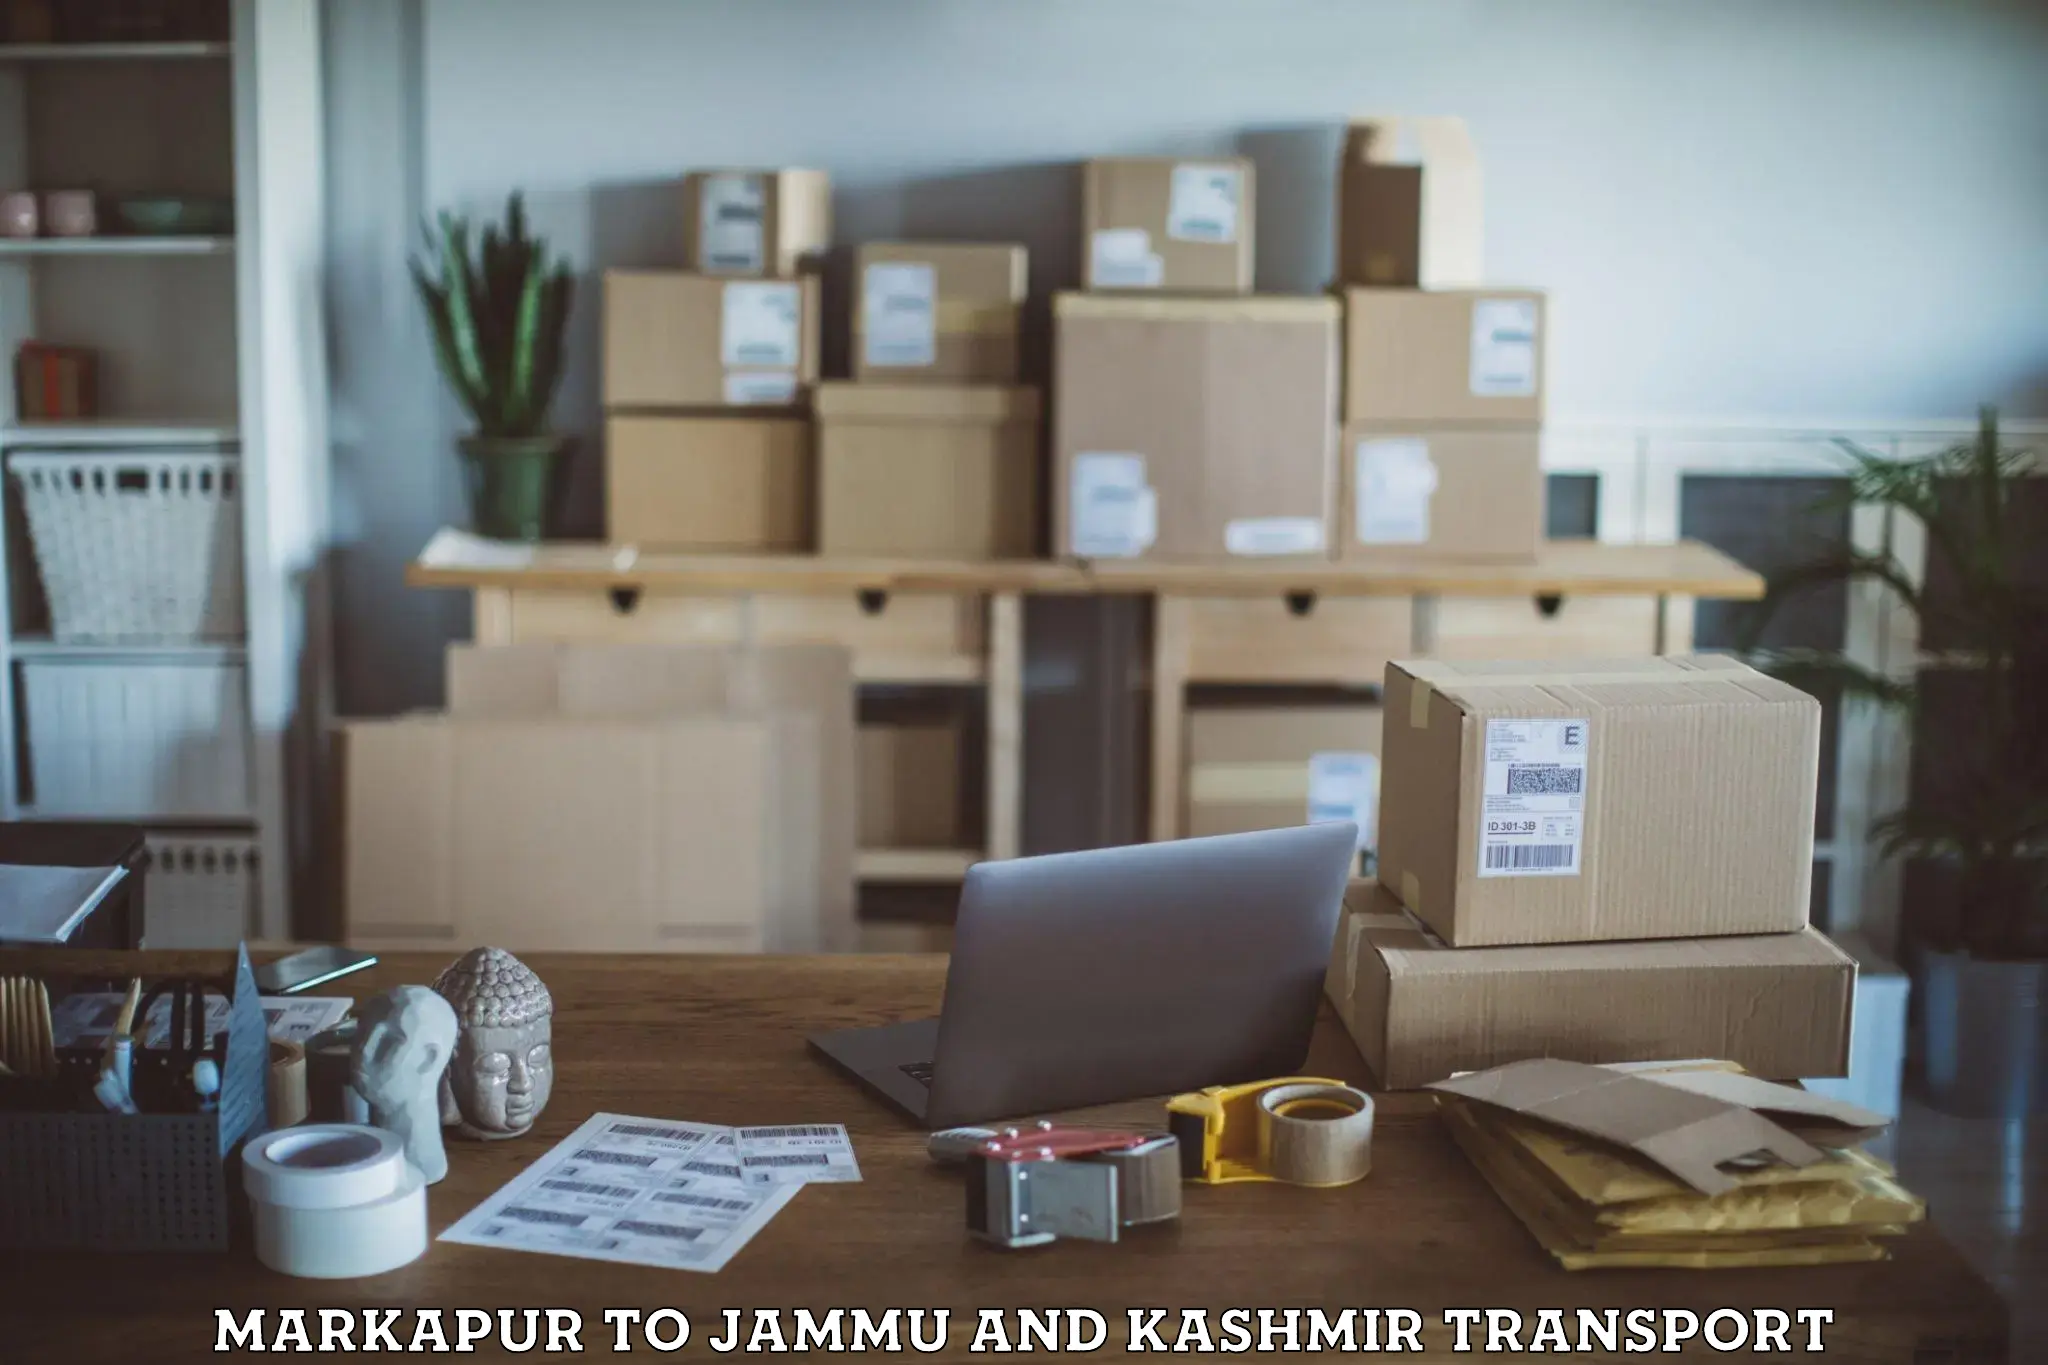 Truck transport companies in India Markapur to Srinagar Kashmir